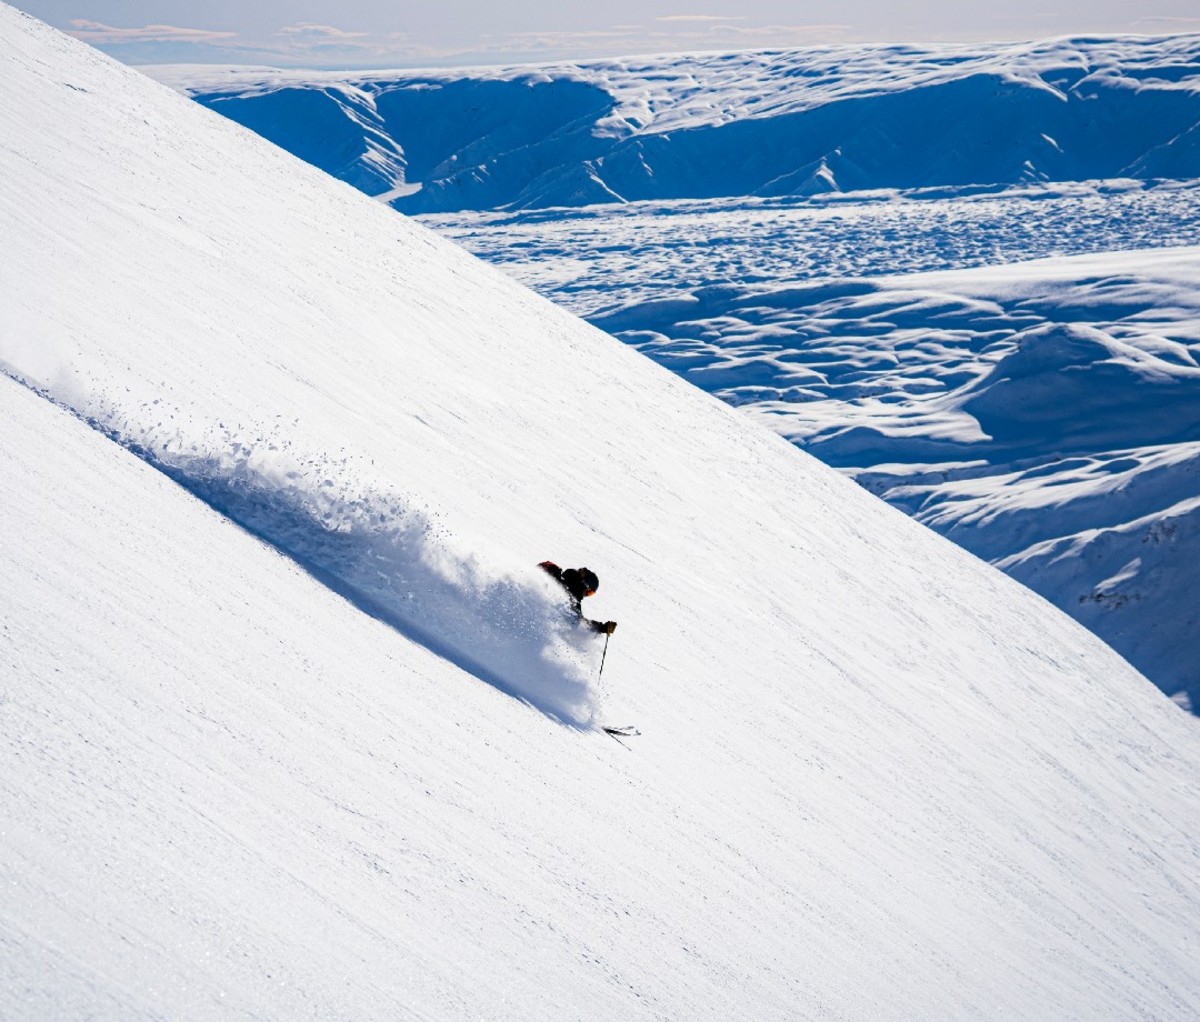 Heli-skier skiing down a powdery slope in Alaska